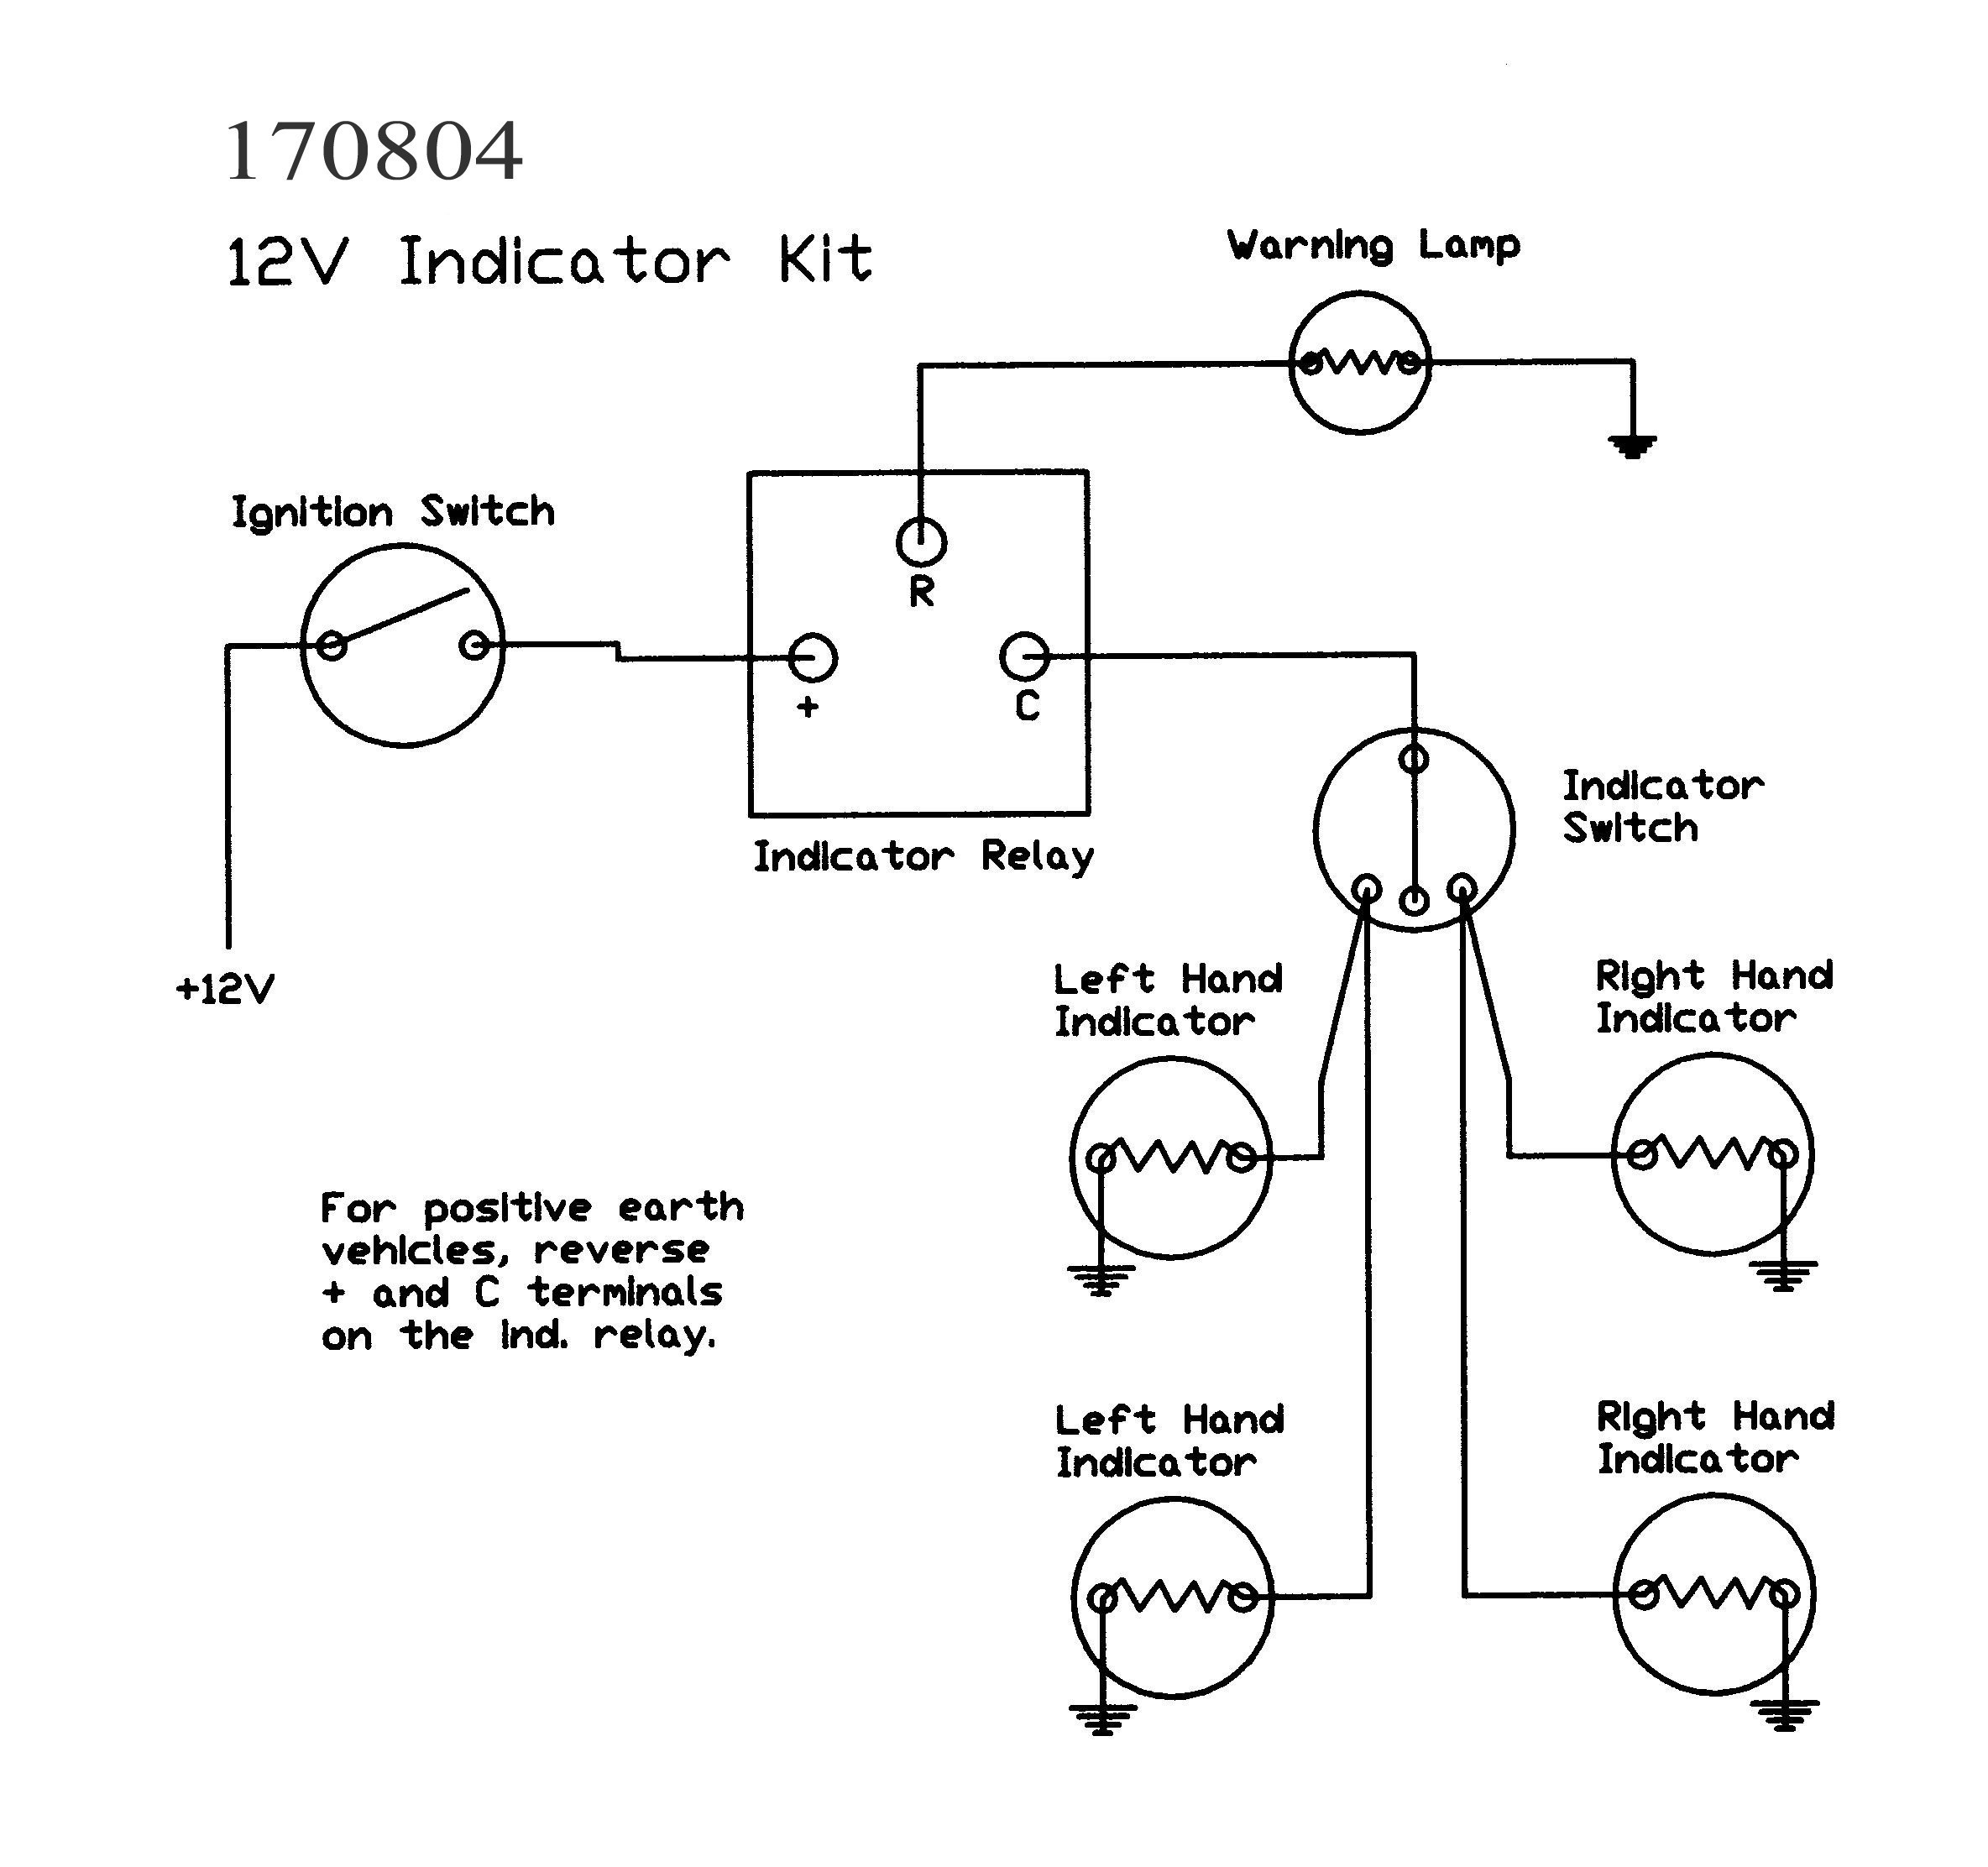 Jcb Ignition Switch Wiring Diagram Inspirationa Turn Signal Wiring Diagram Lovely Jcb 3 0d 4—